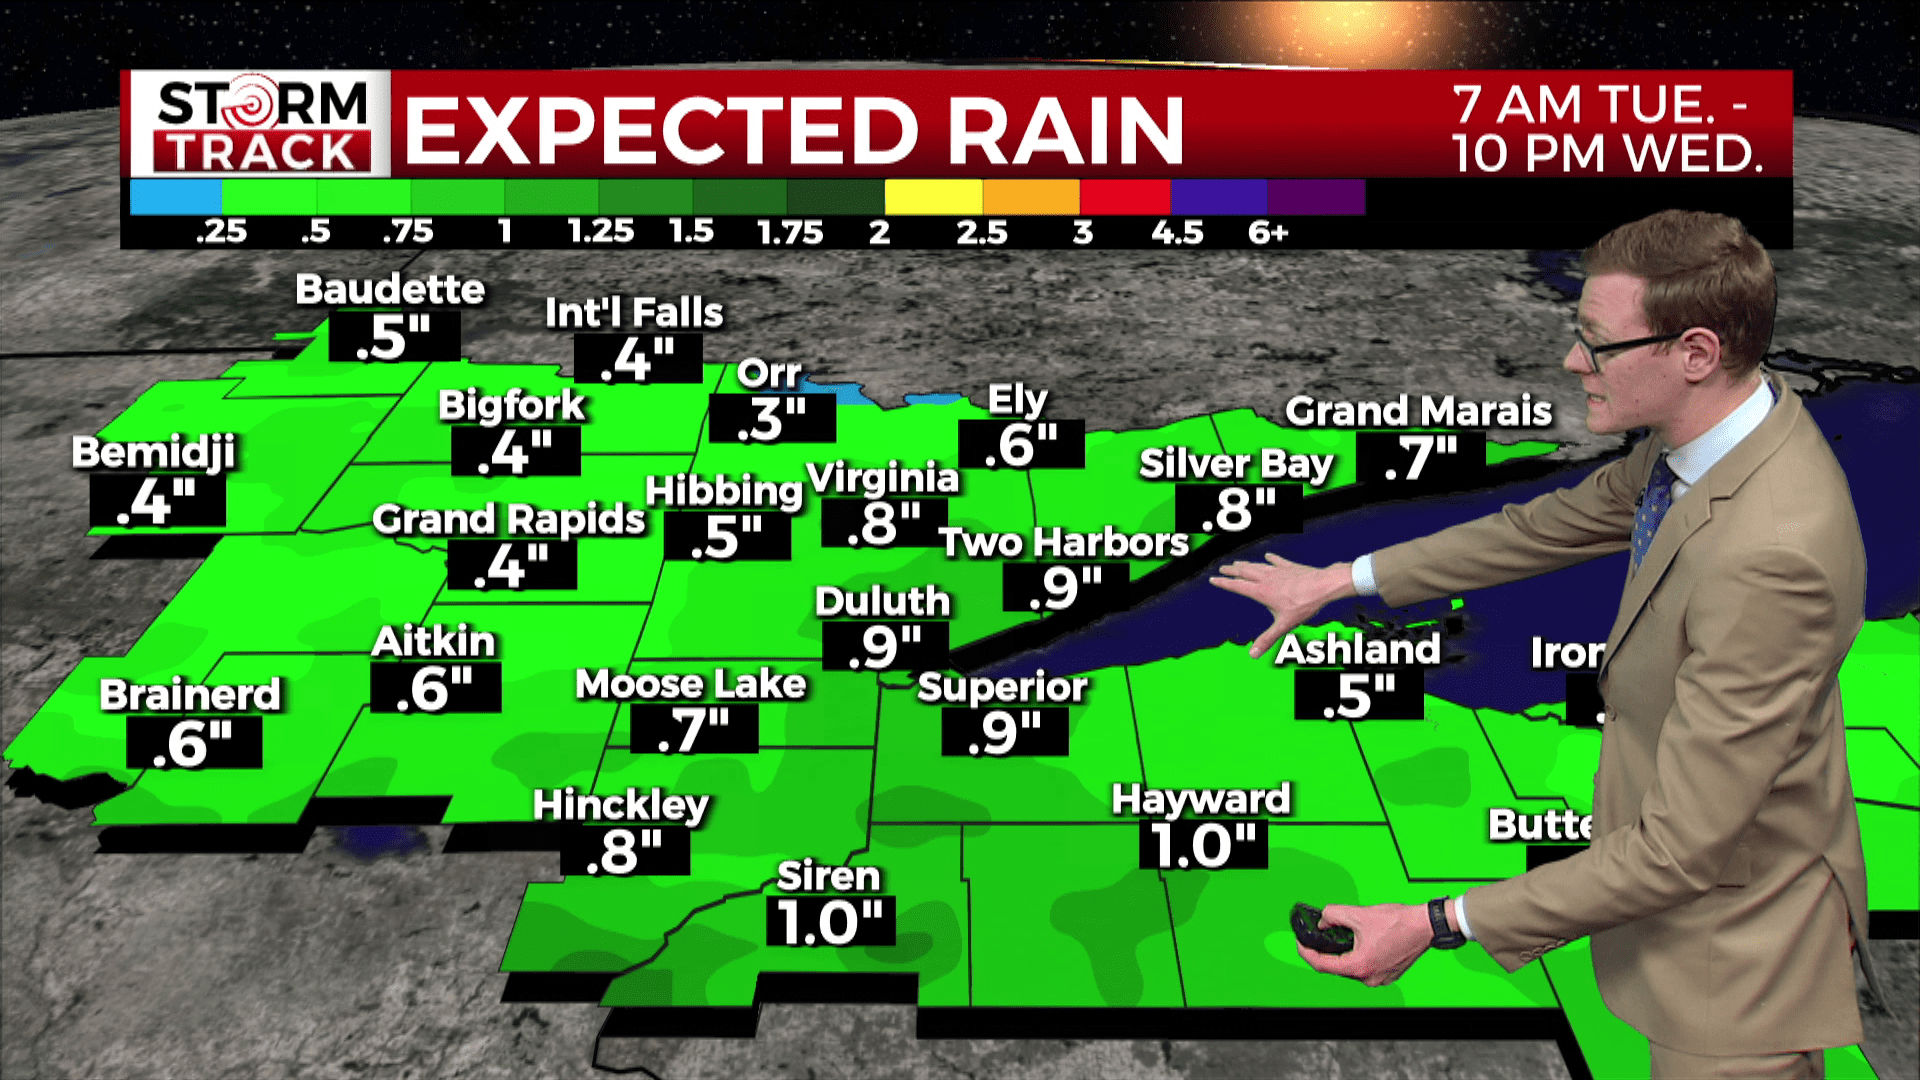 Brandon showing expected rain amounts